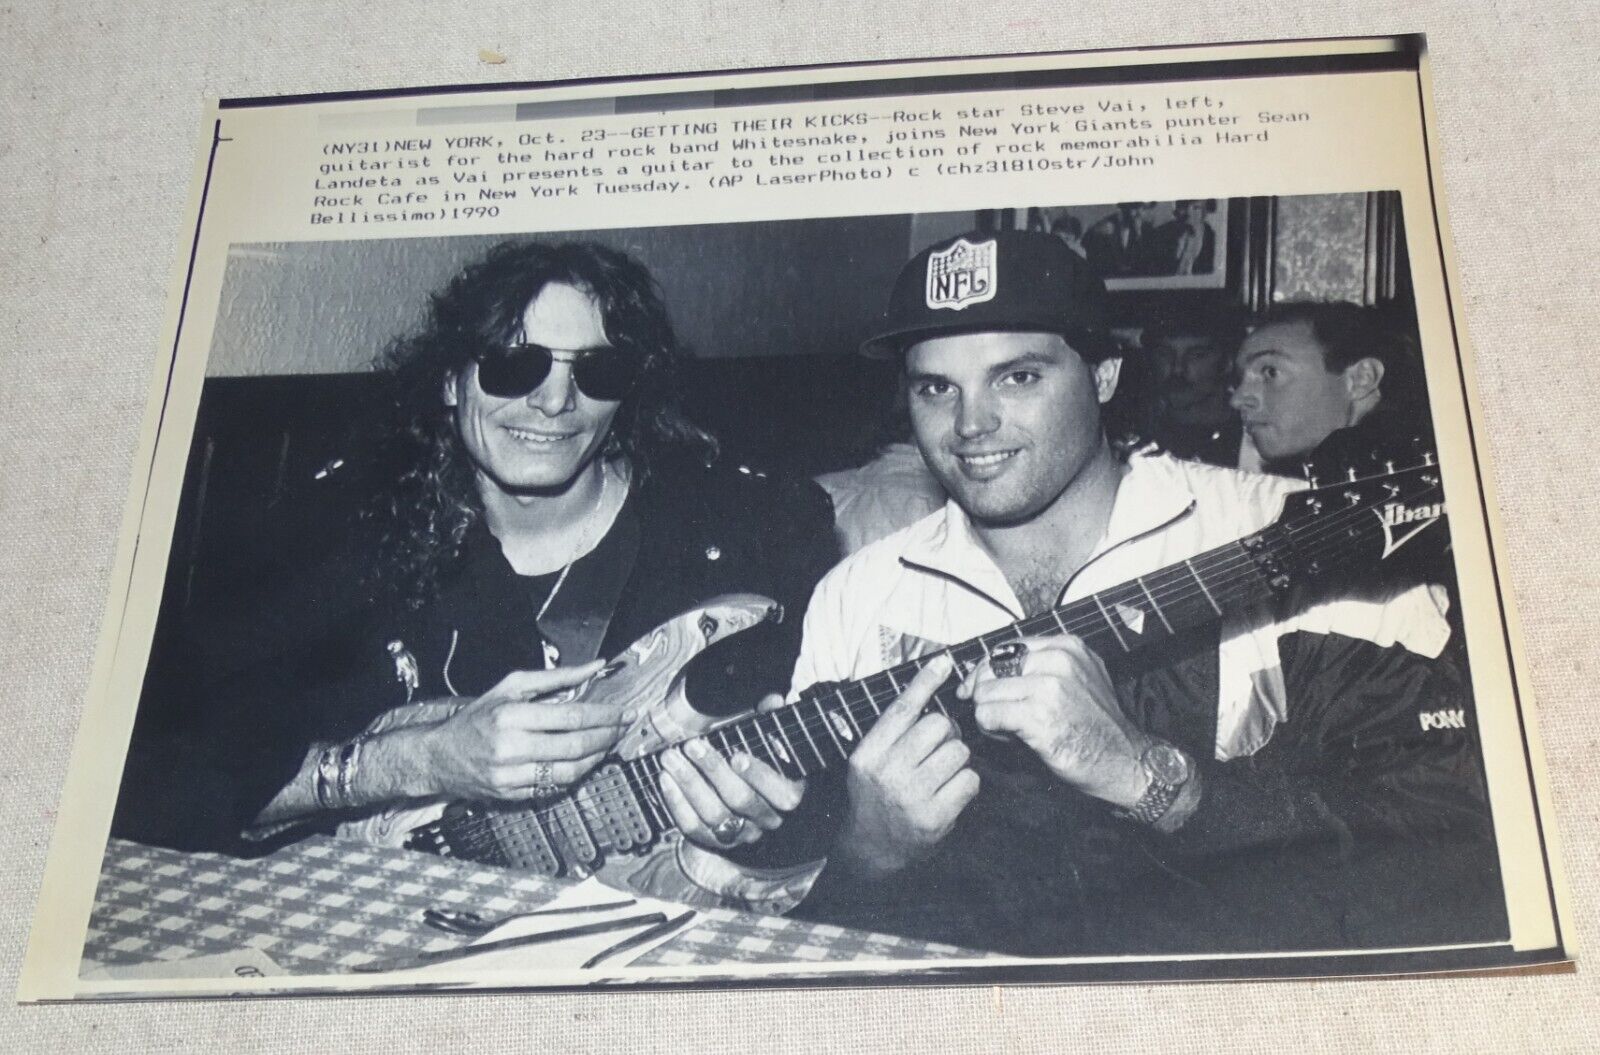 1990 AP Laser Photo STEVE VAI (Whitesnake) & Sean Landeta (NY Giants) Hard Rock